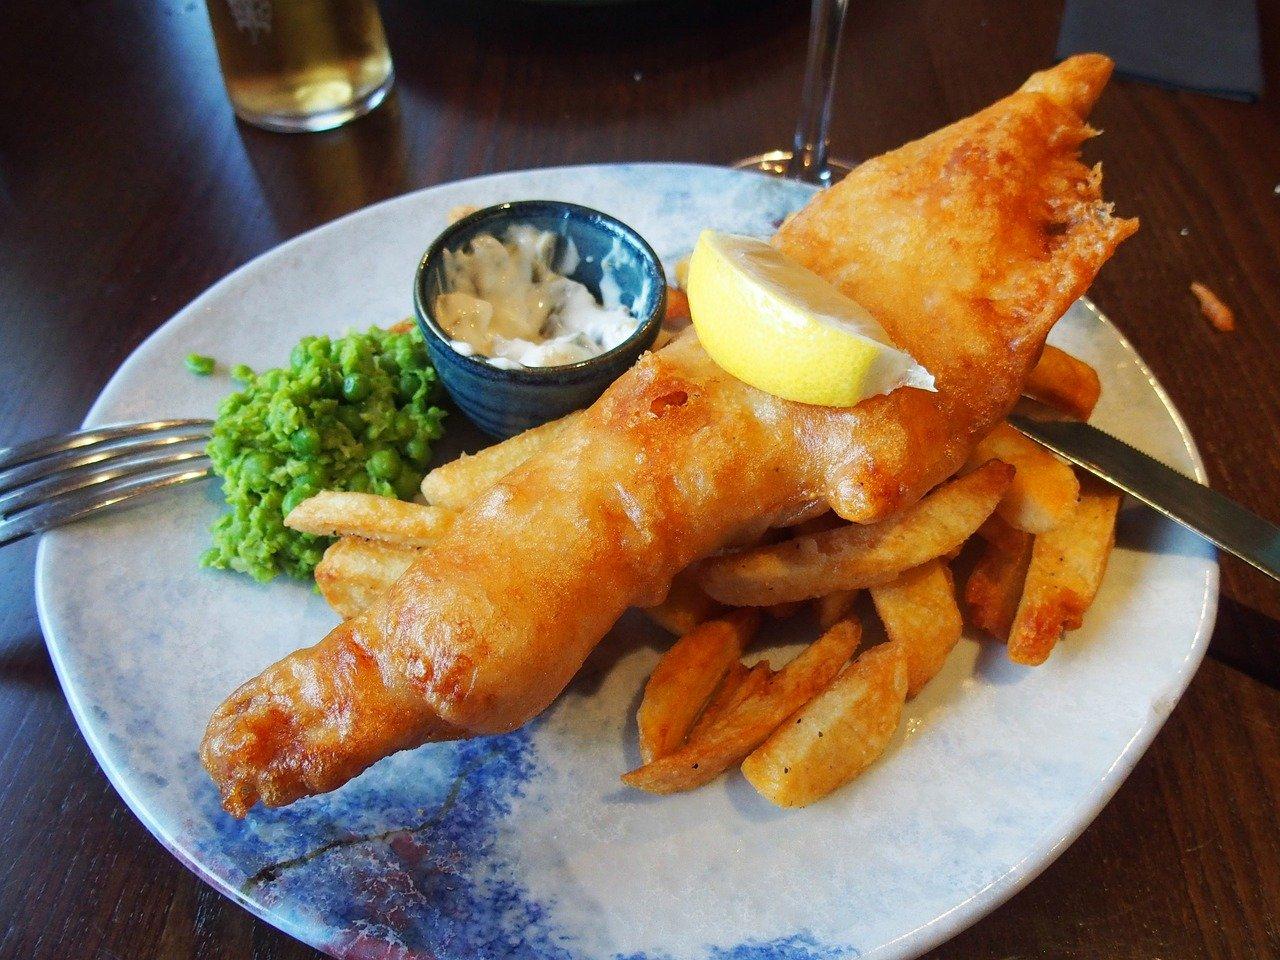 Fish And Chips Шотландия - Бесплатное фото на Pixabay